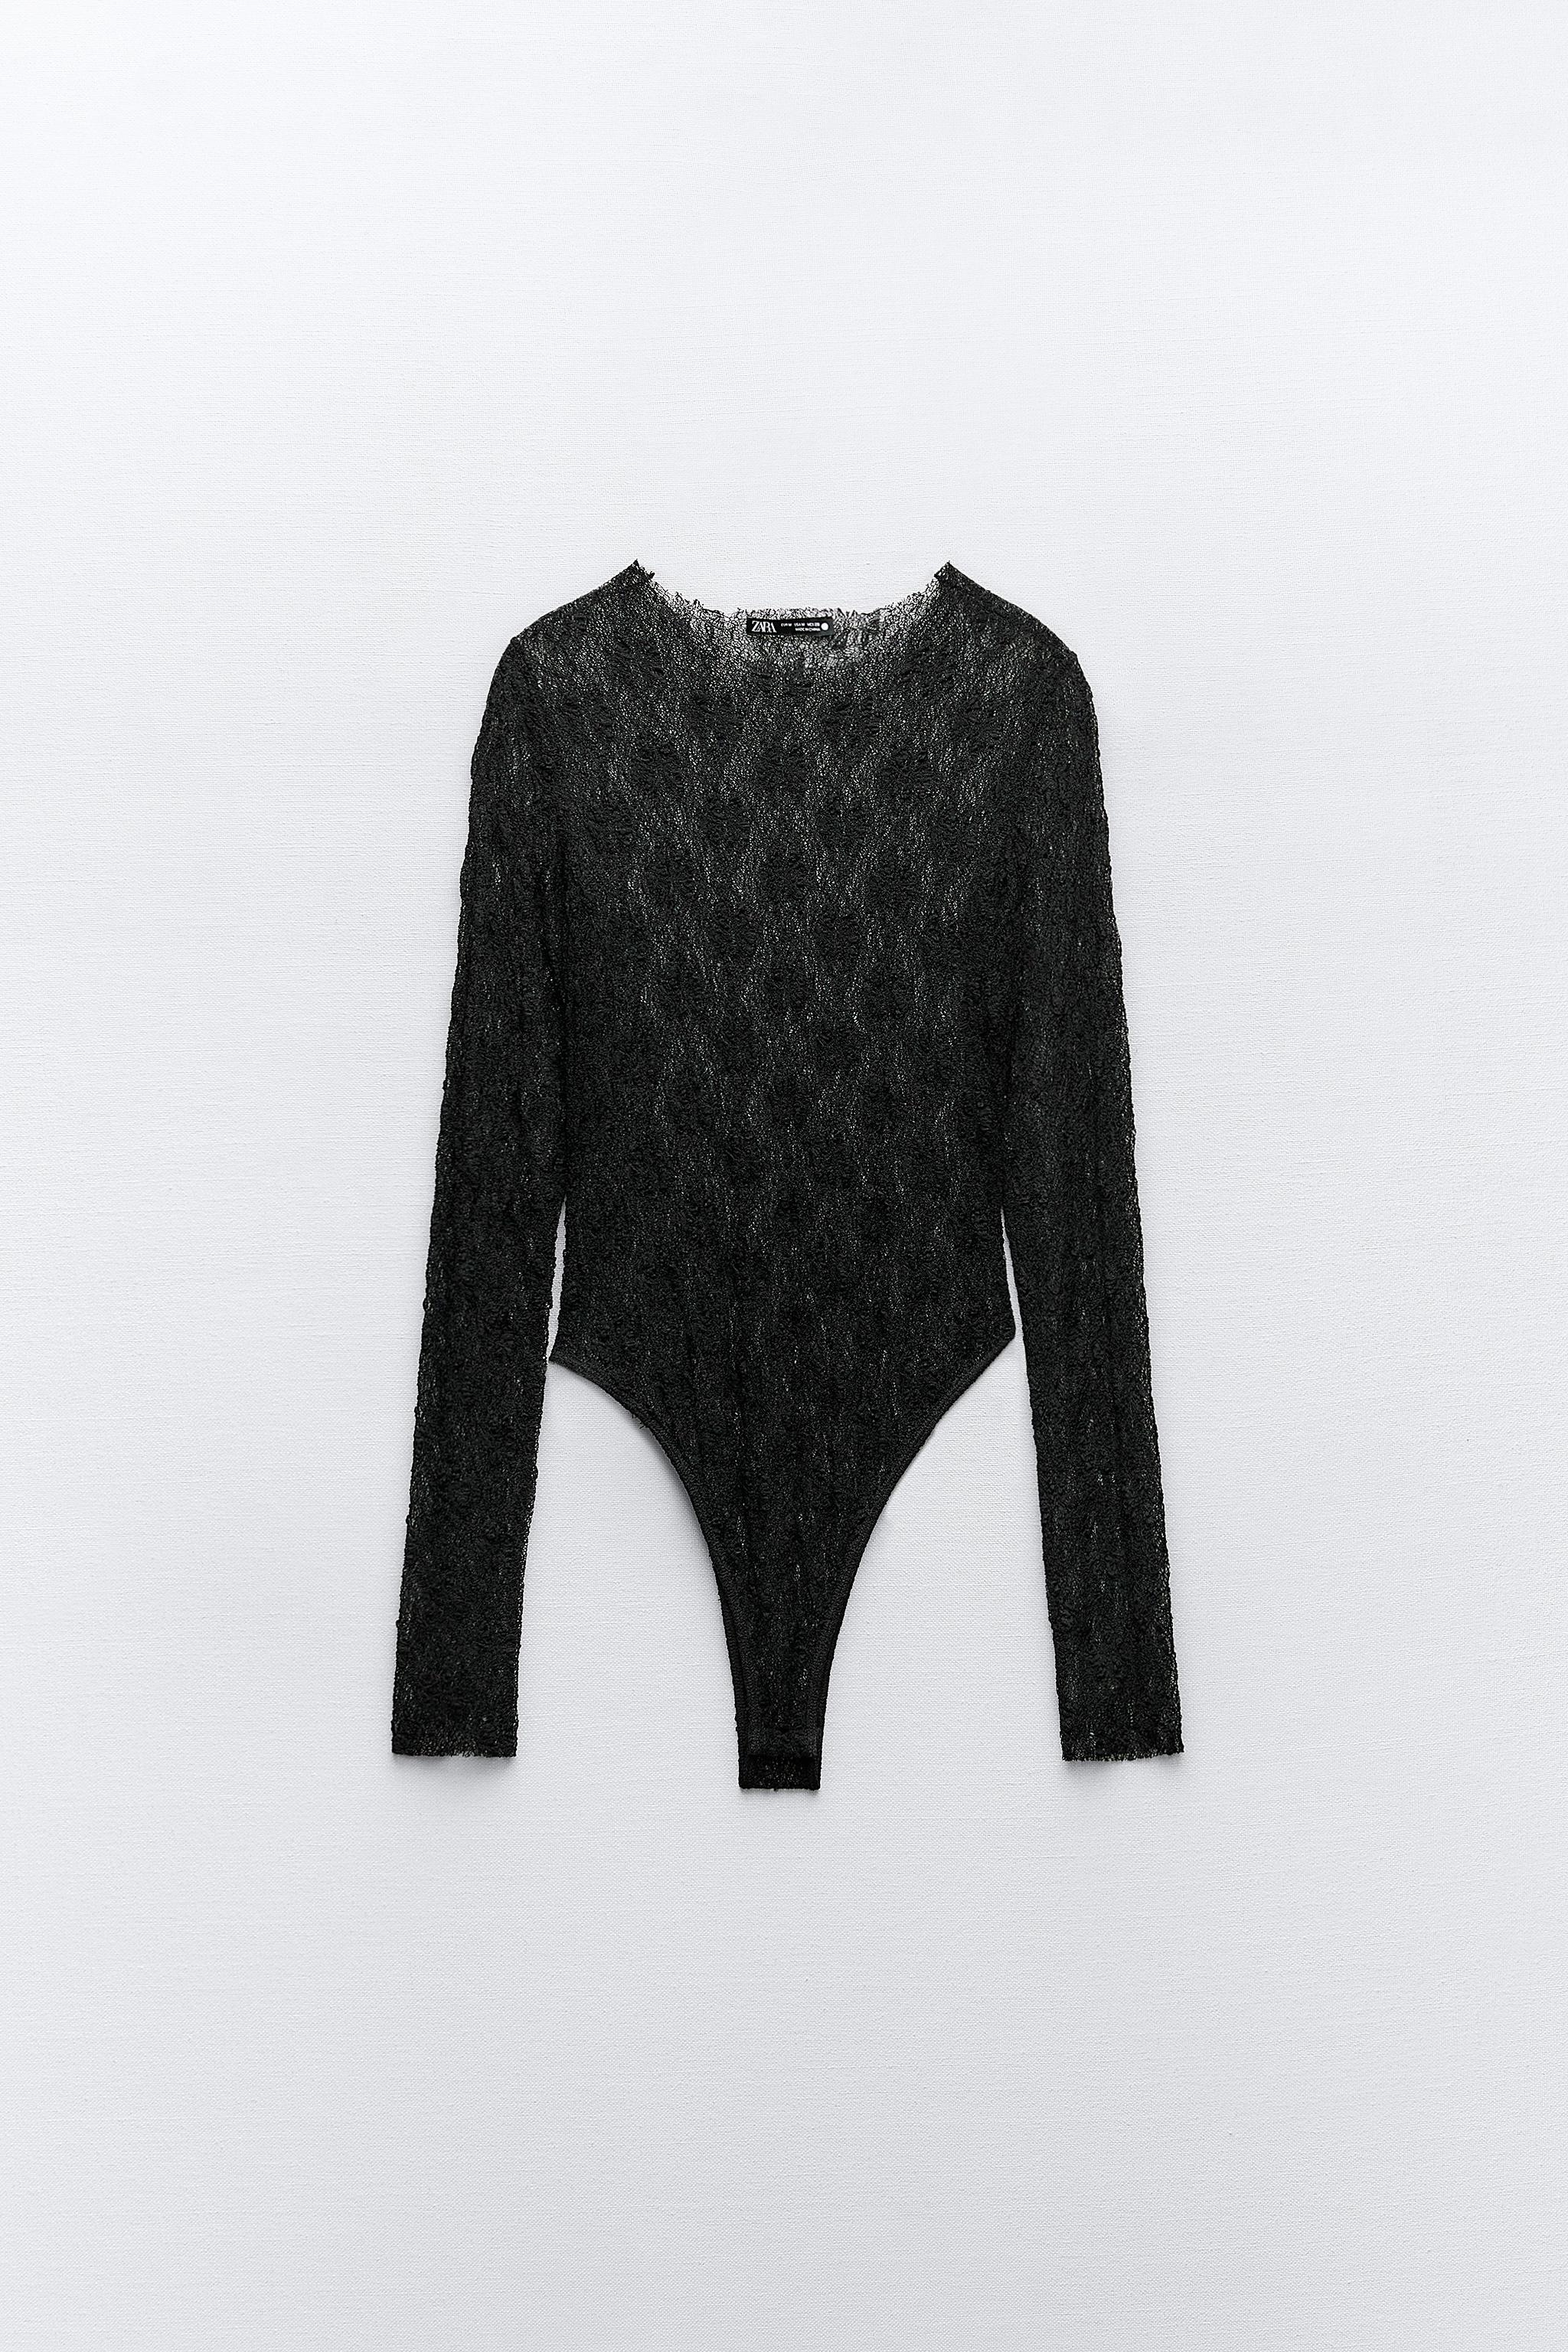 ZARA Wrap Long Sleeve Lace Black Bodysuit Top 5039/860 - M size